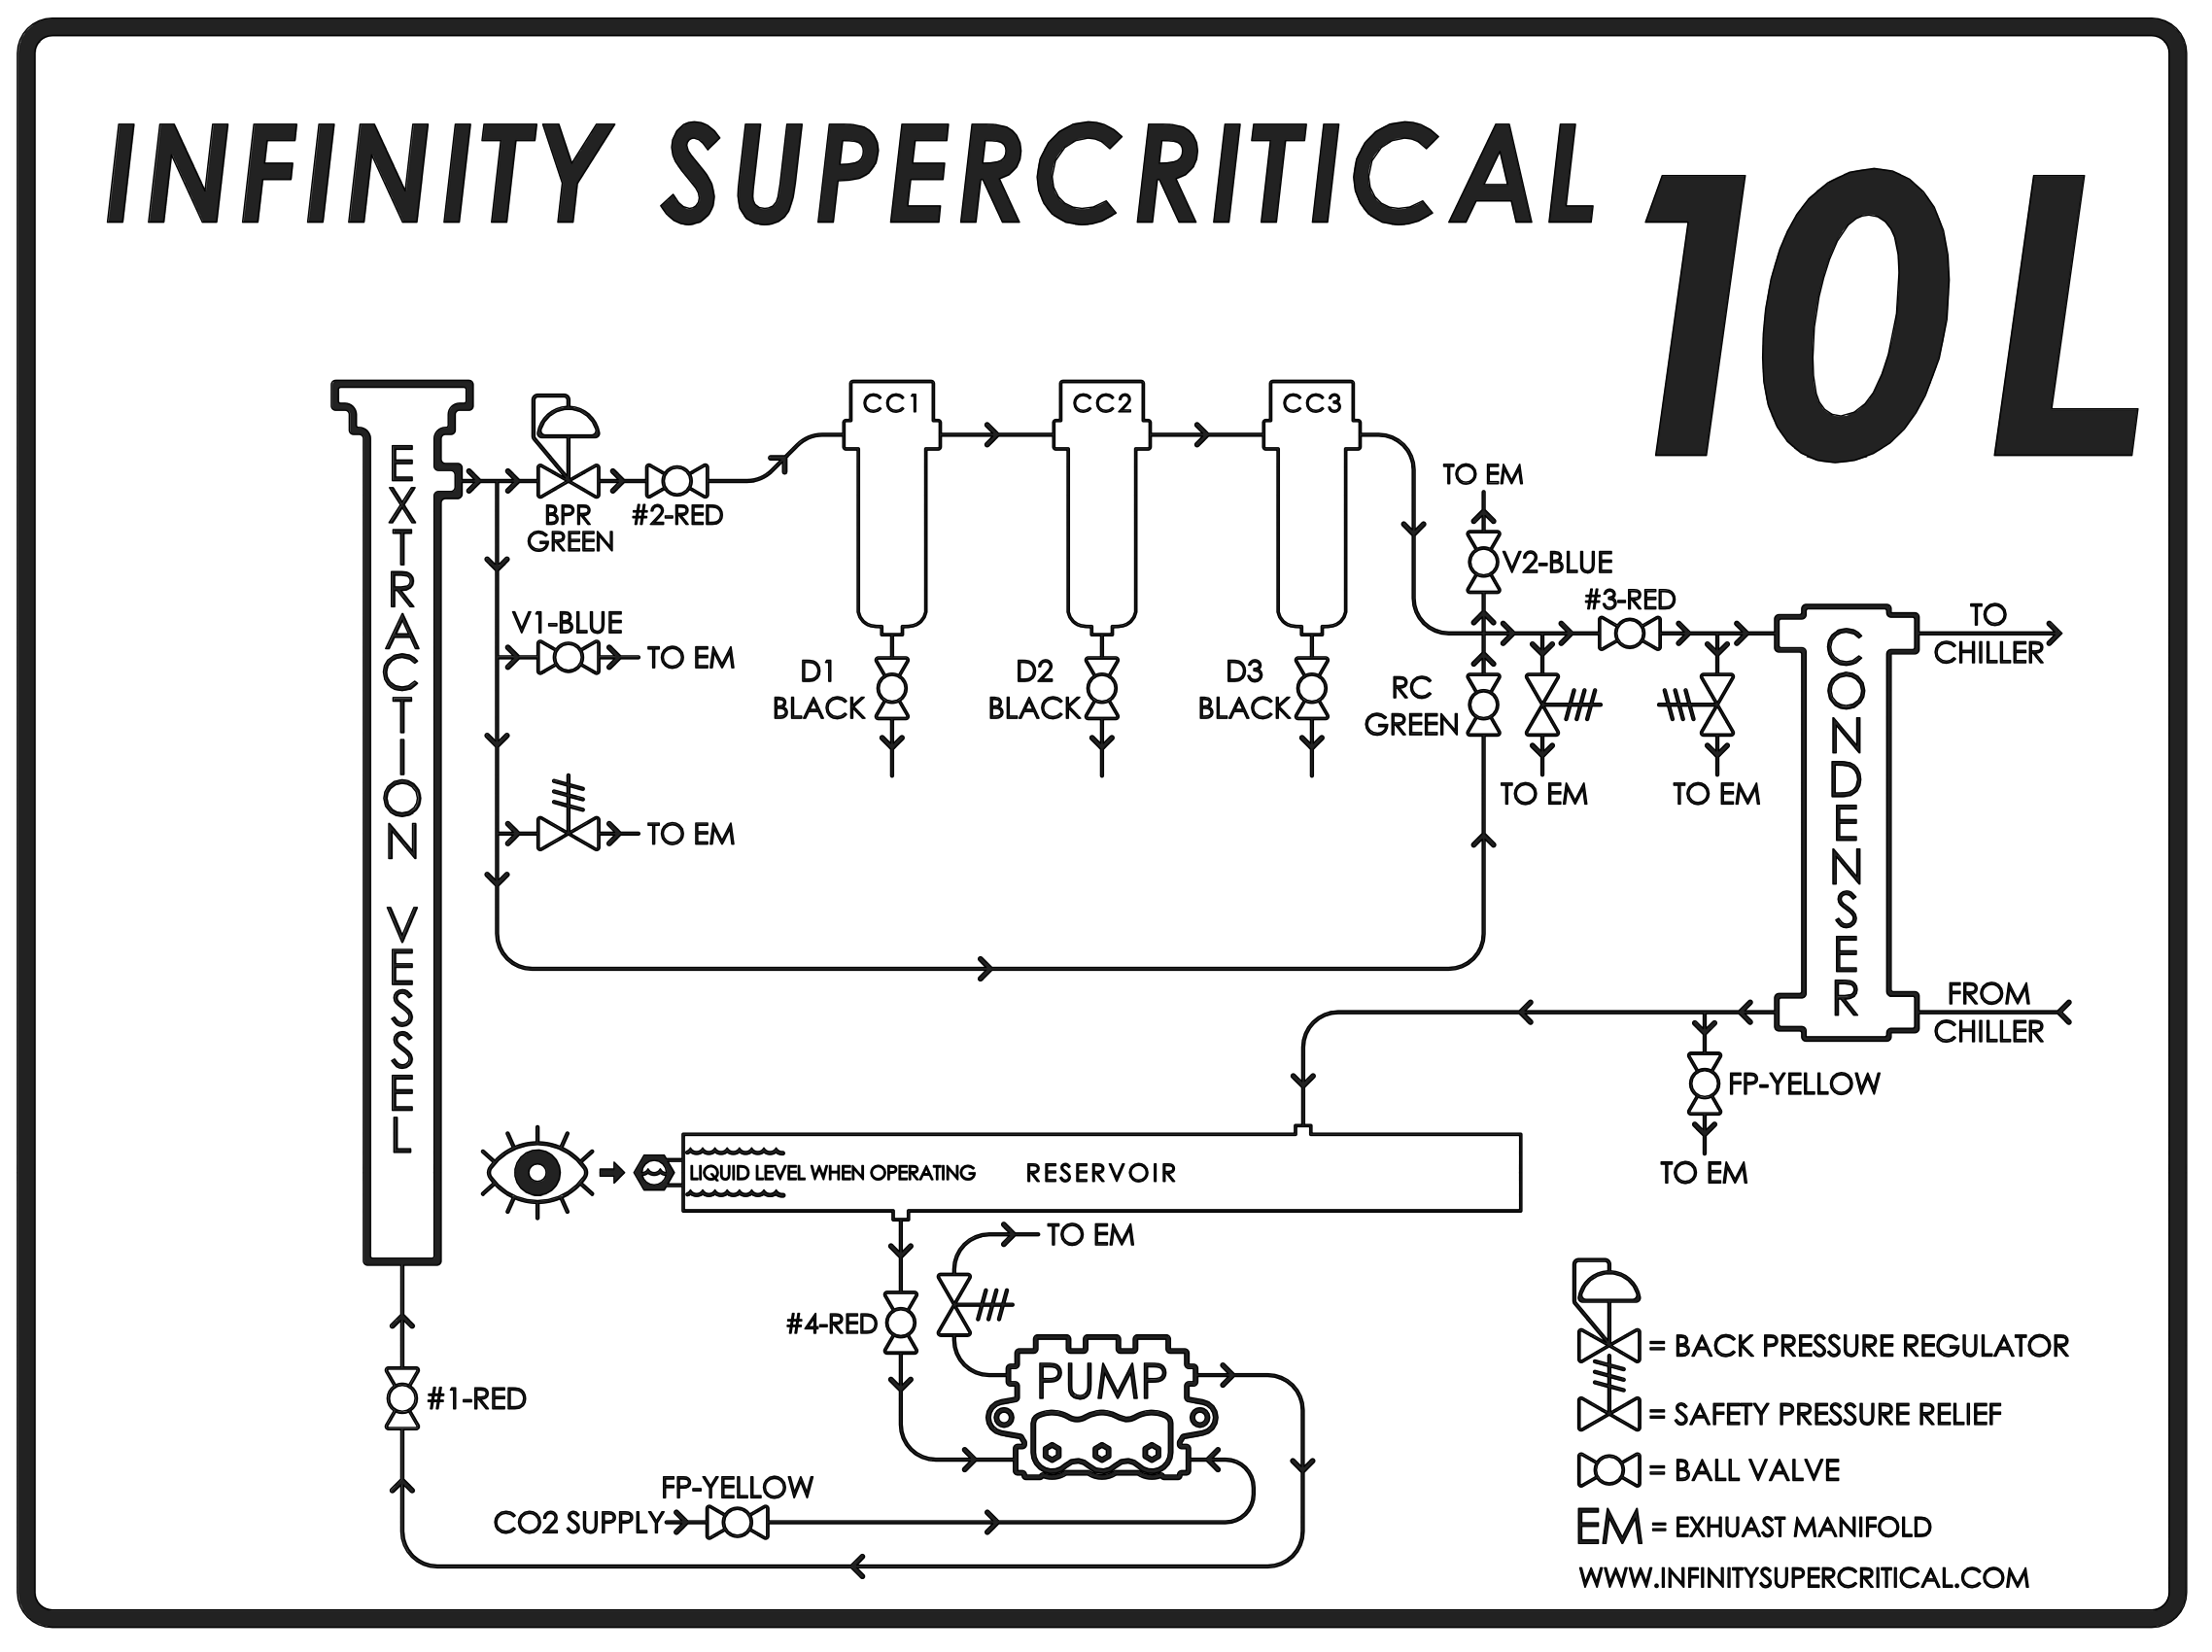 flow diagram using supercritical co2